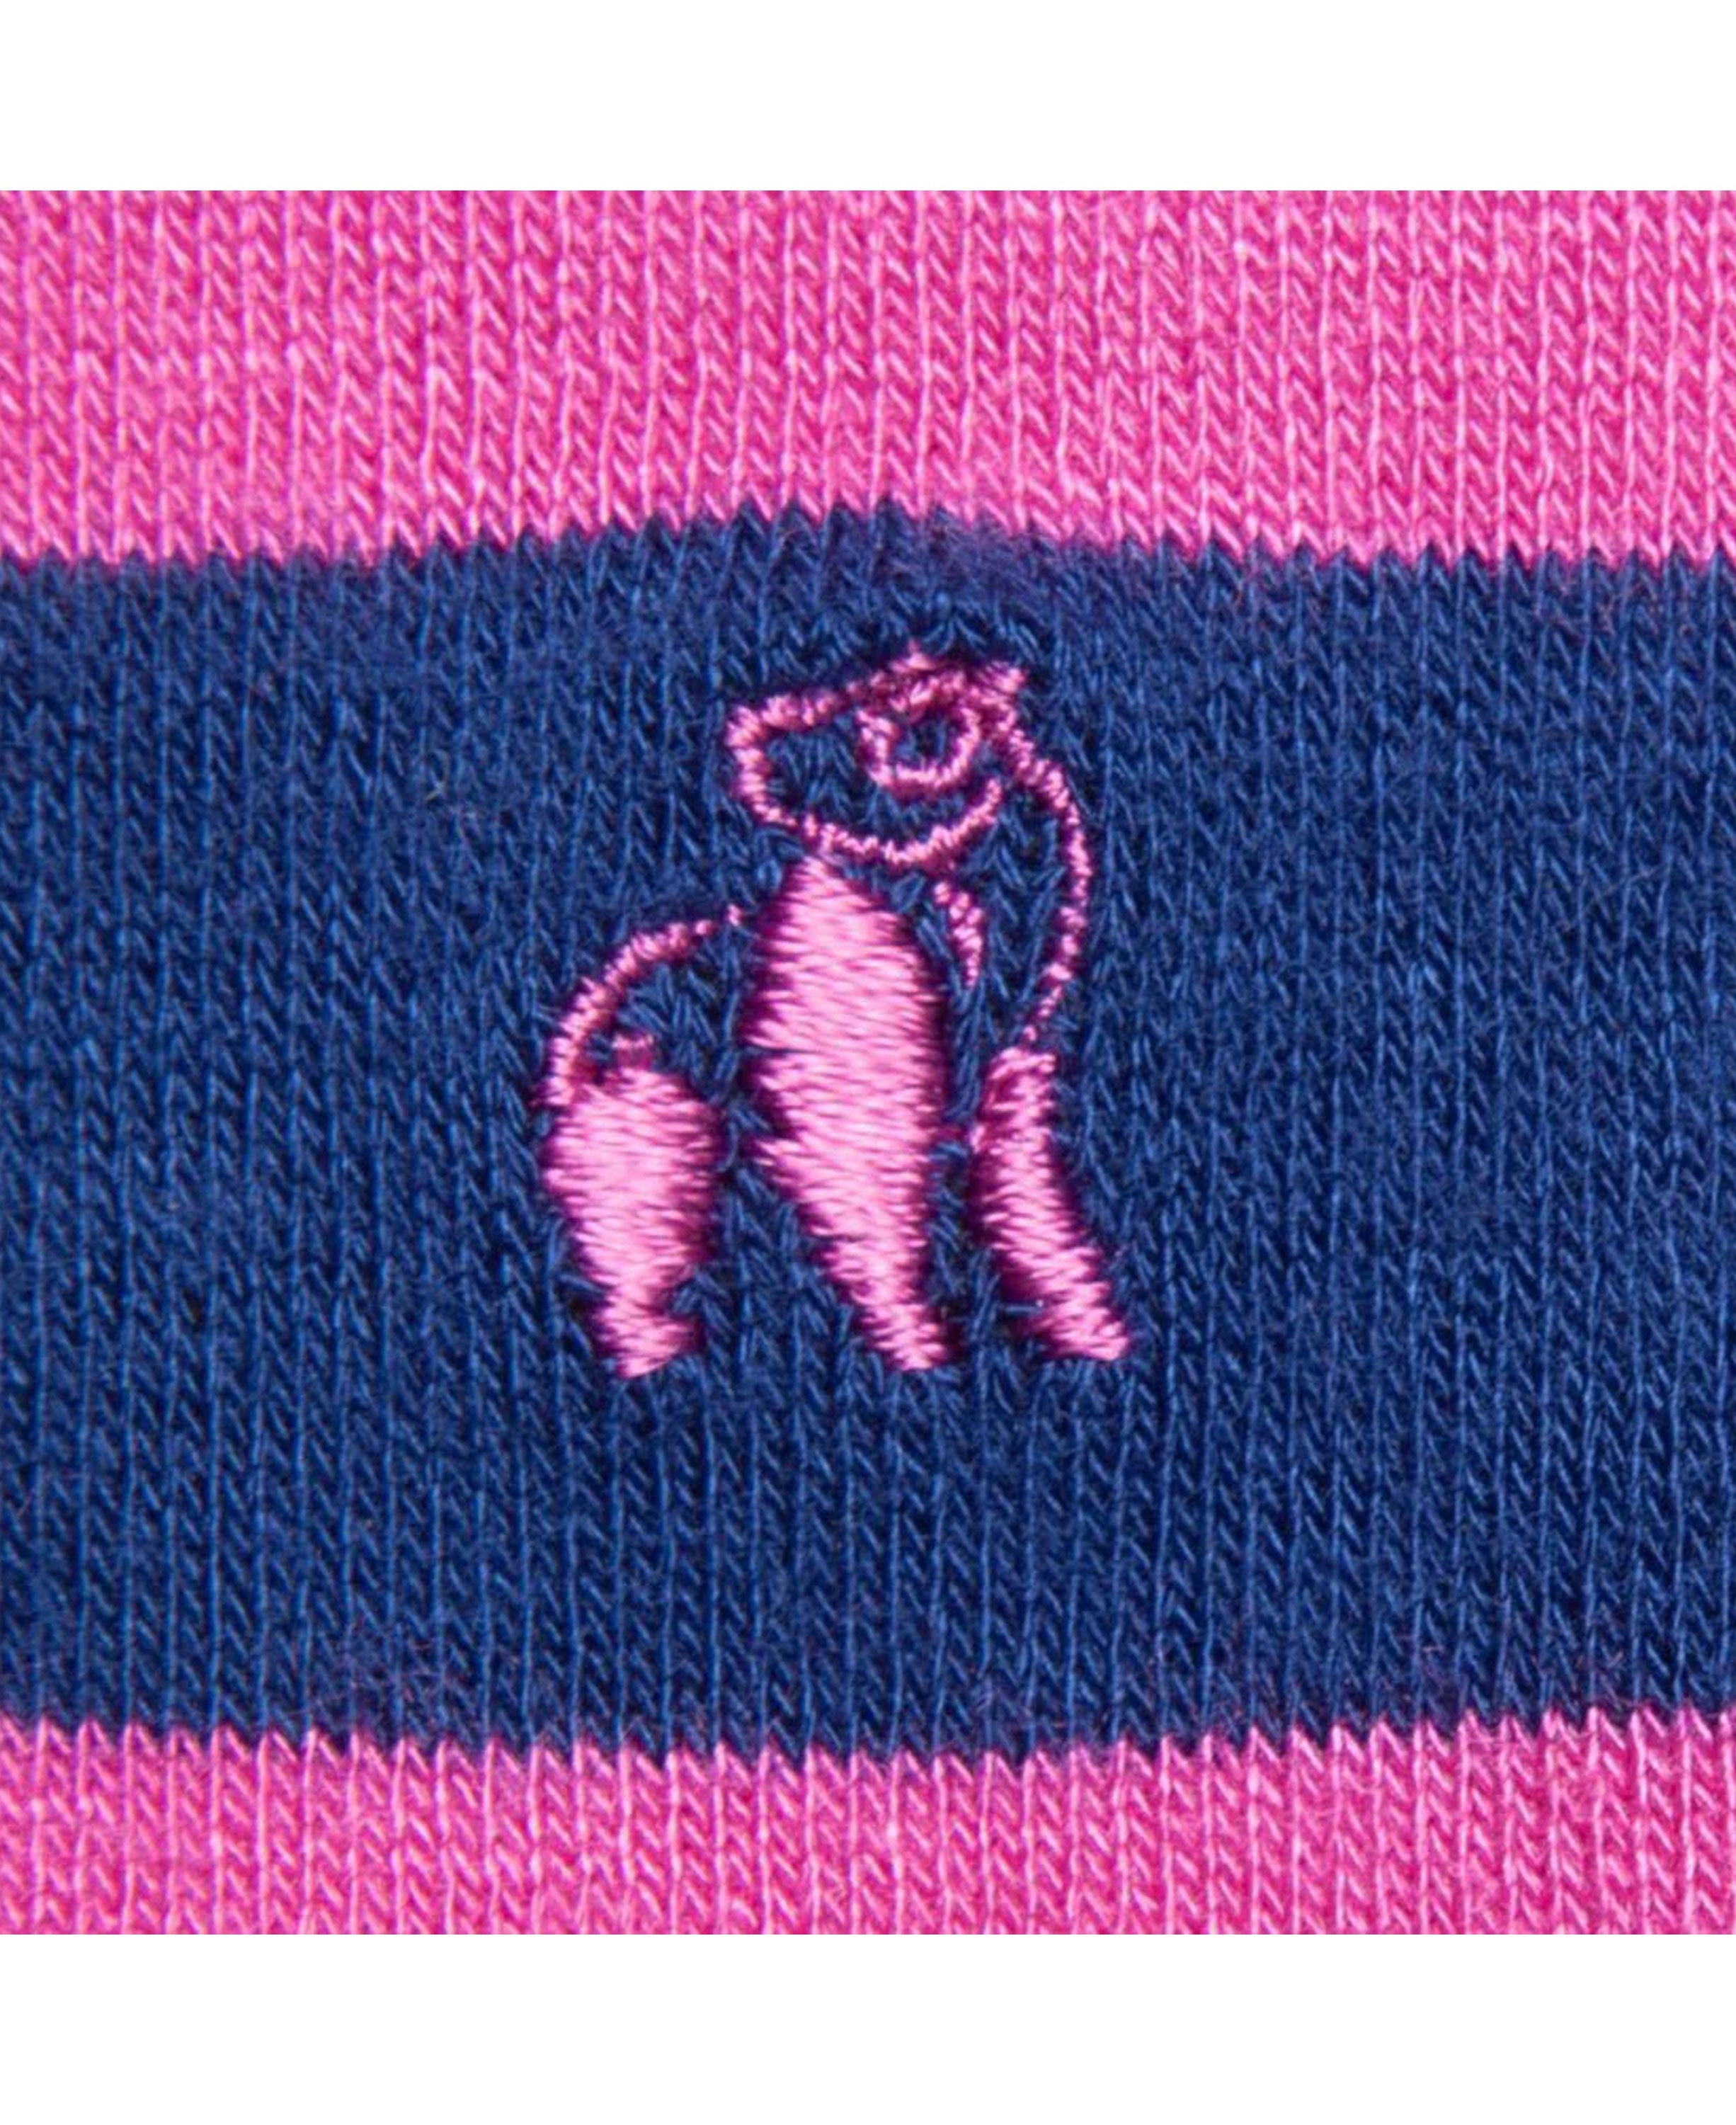 Striped Socks - Rich Pink Stripe